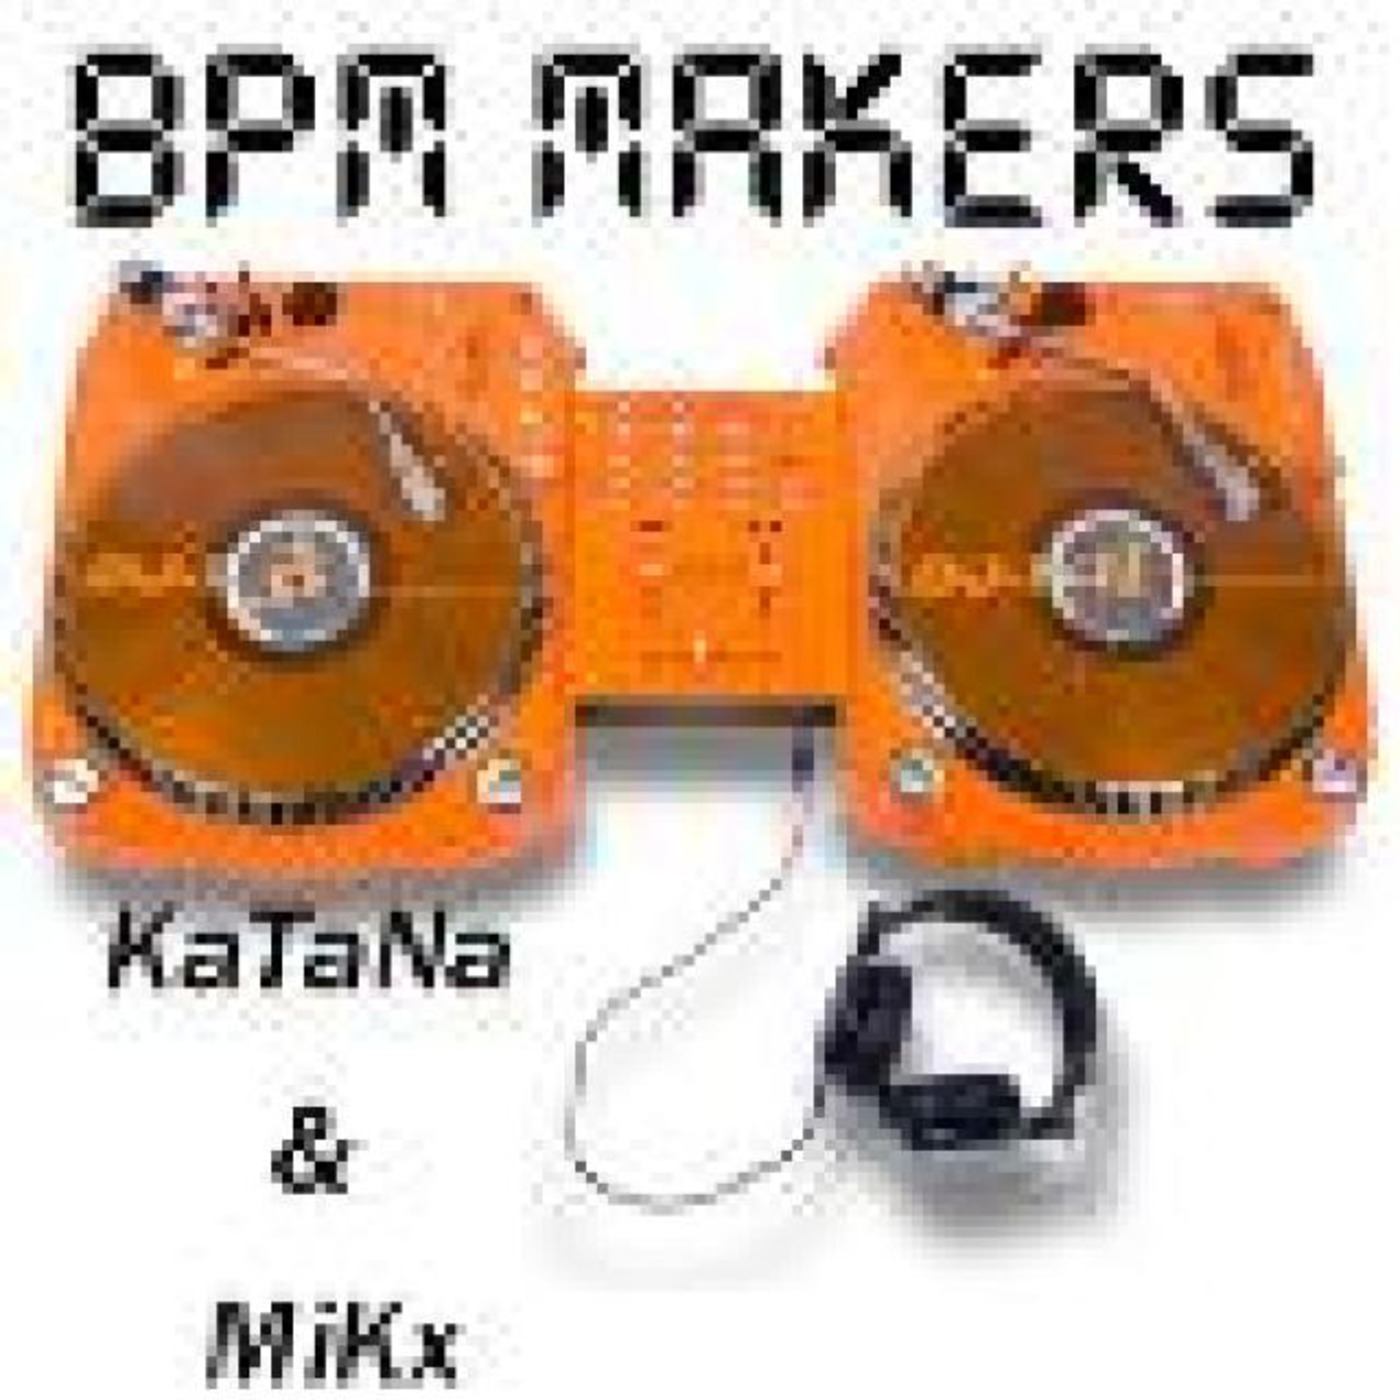 Podcast bpm makers' Podcast